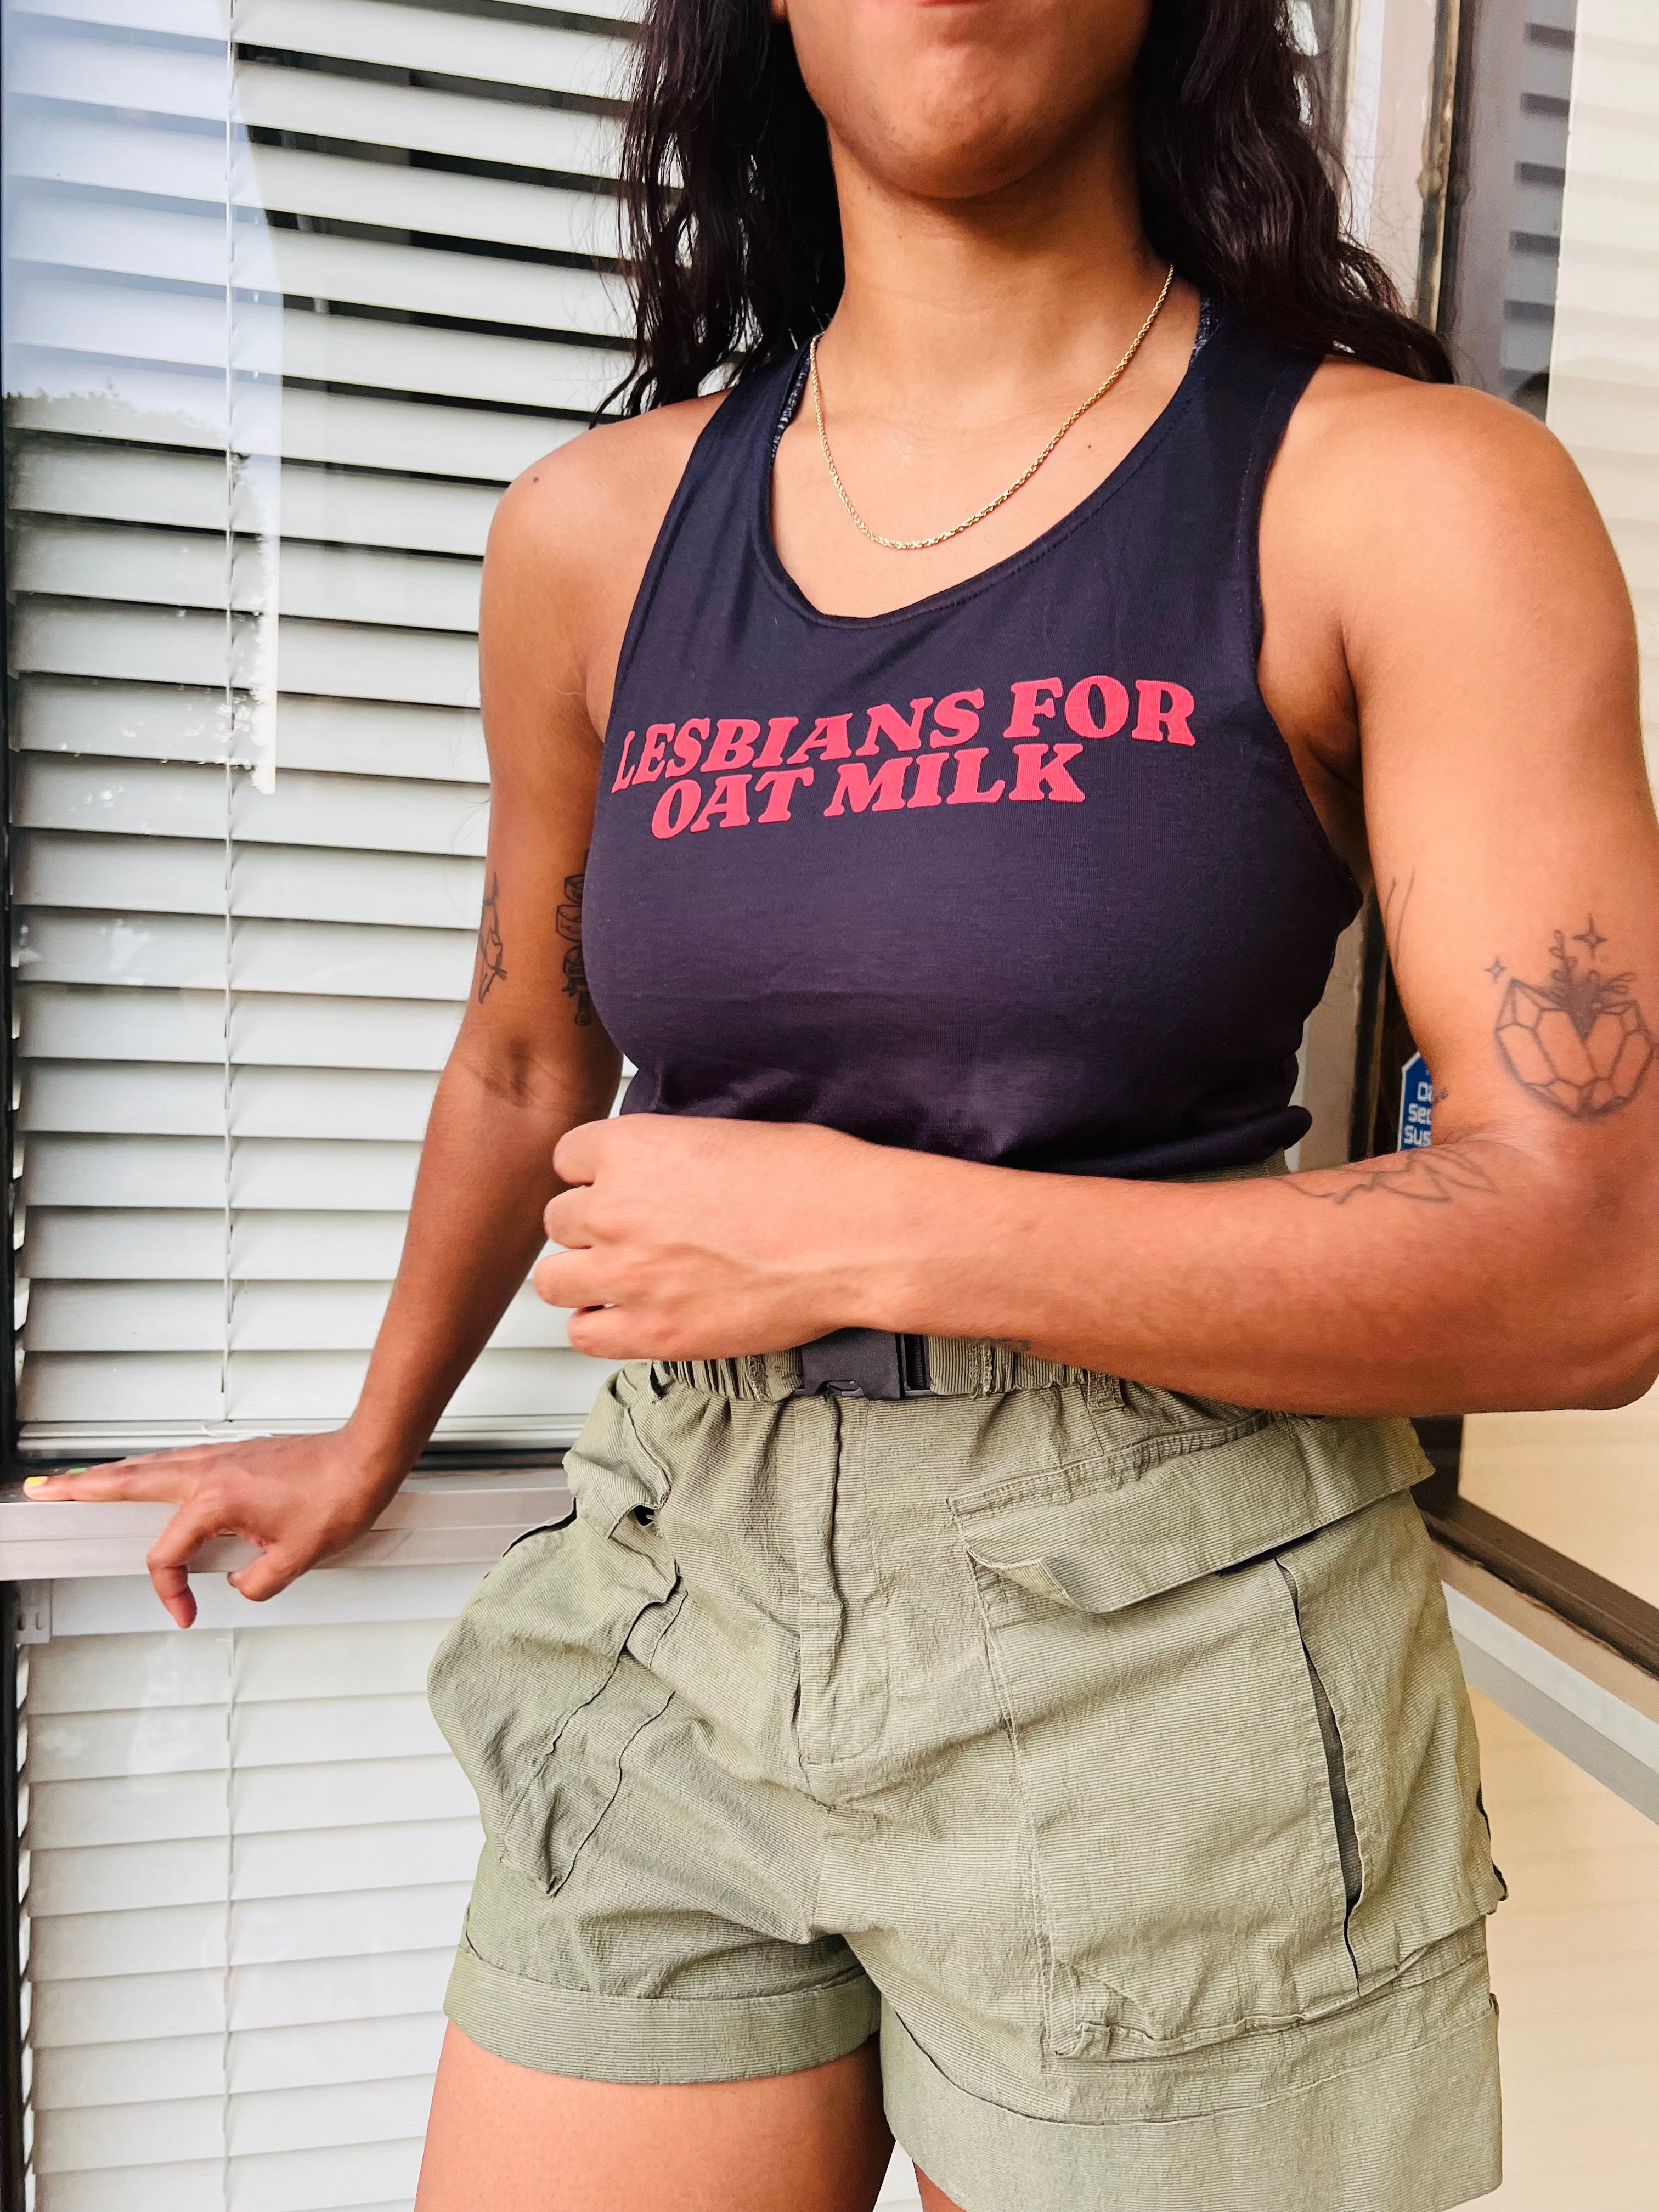 Lesbians For Oat Milk Funny Tank top